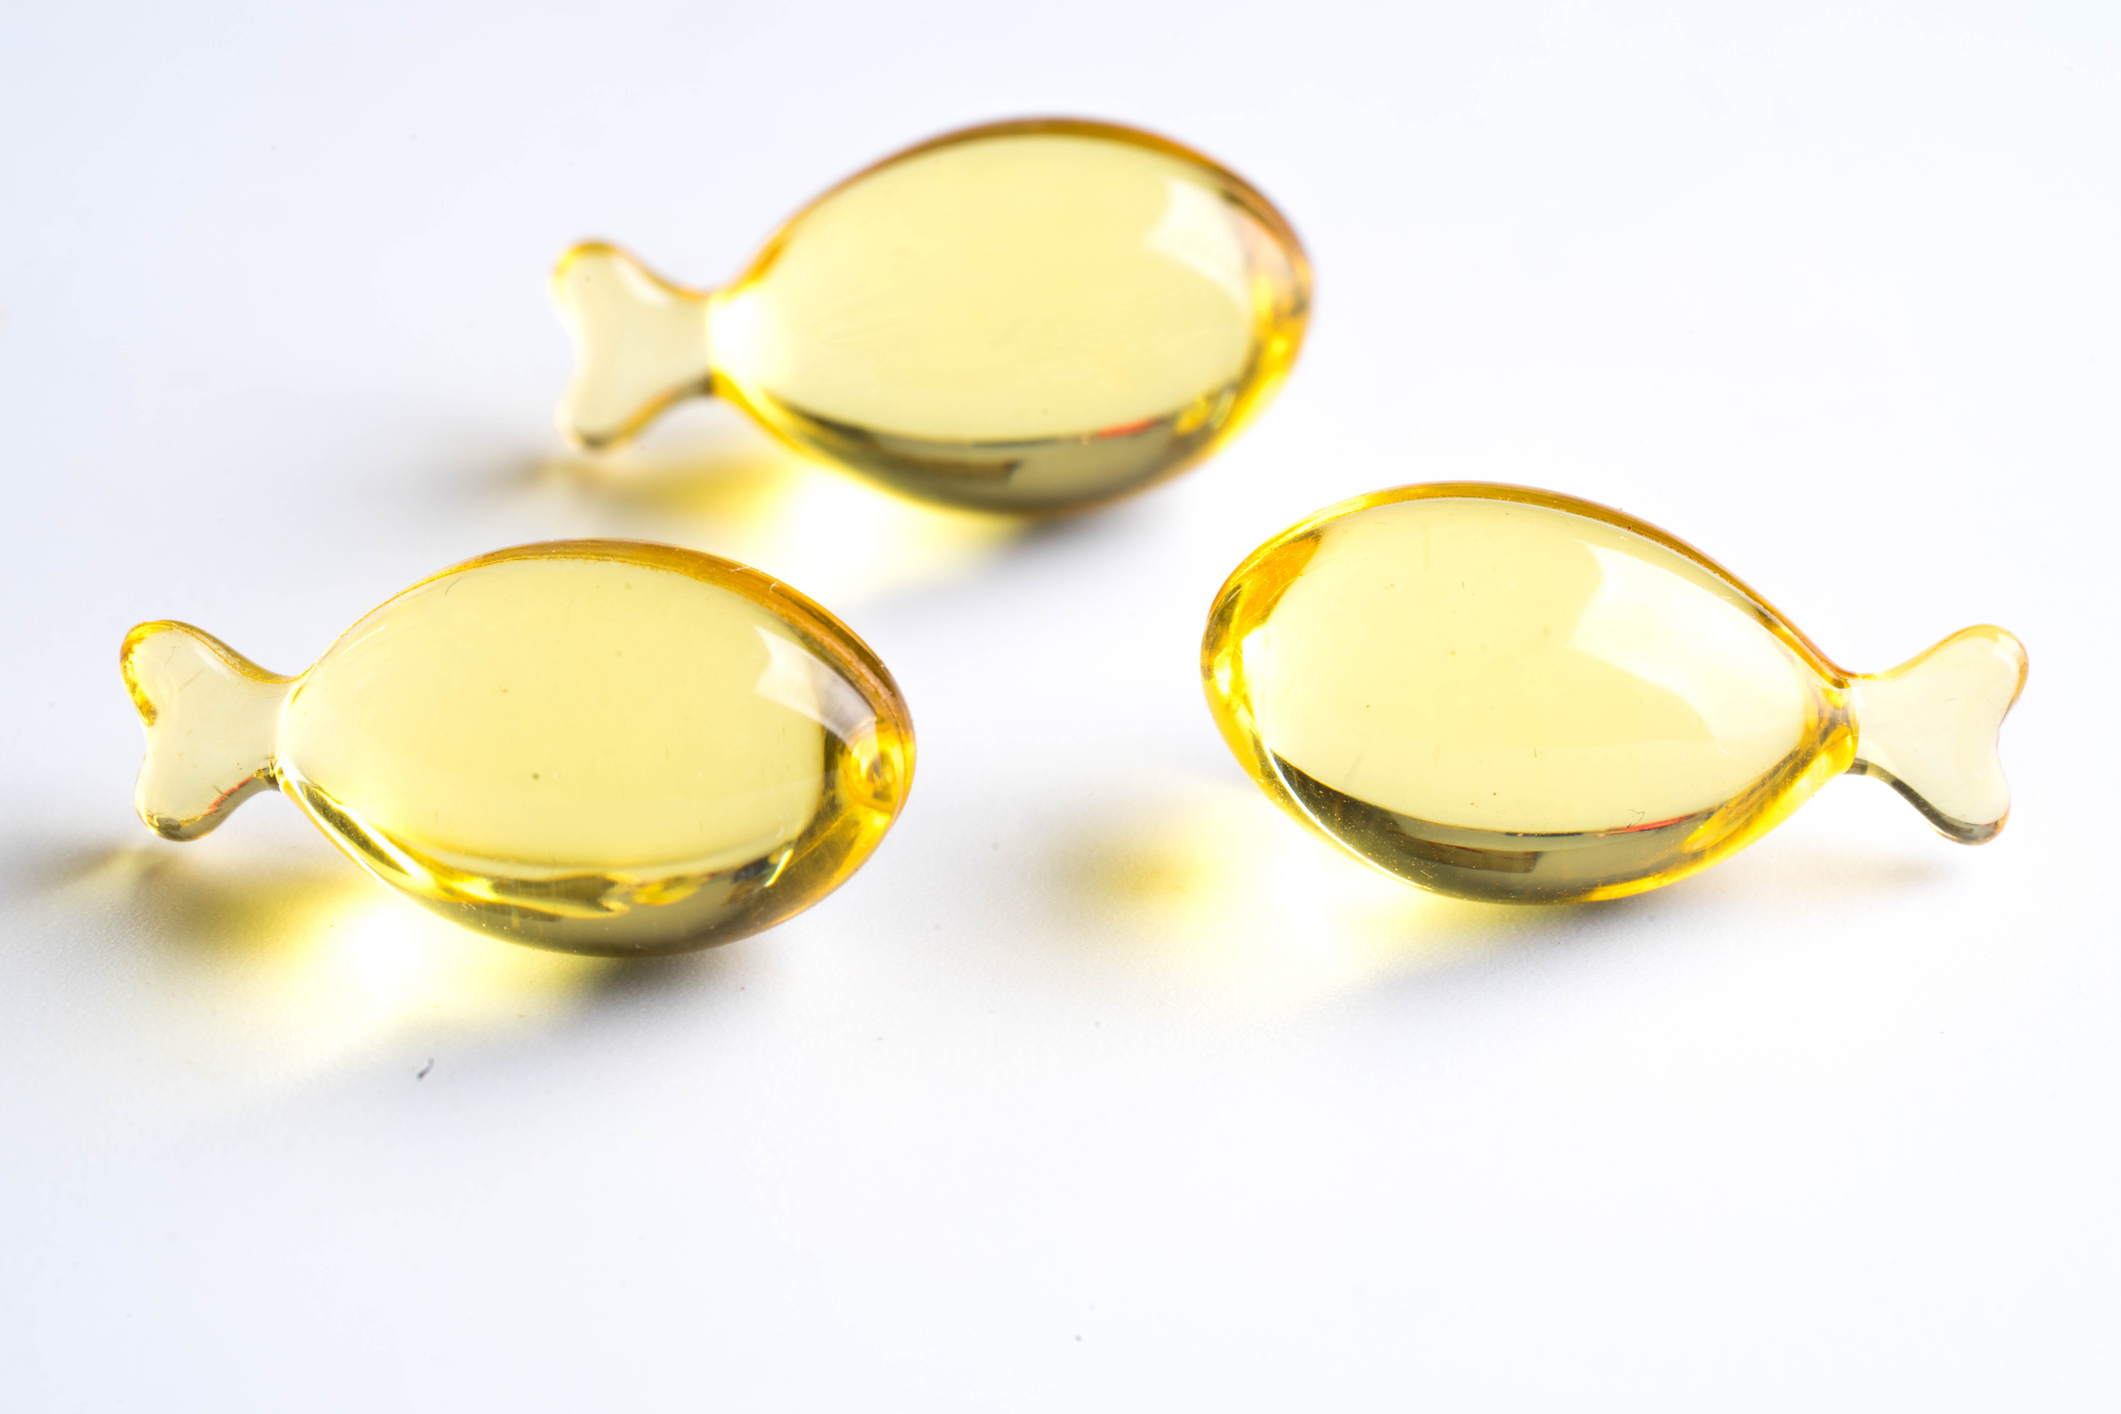 For brain-saving omega-3  benefits, dosage matters